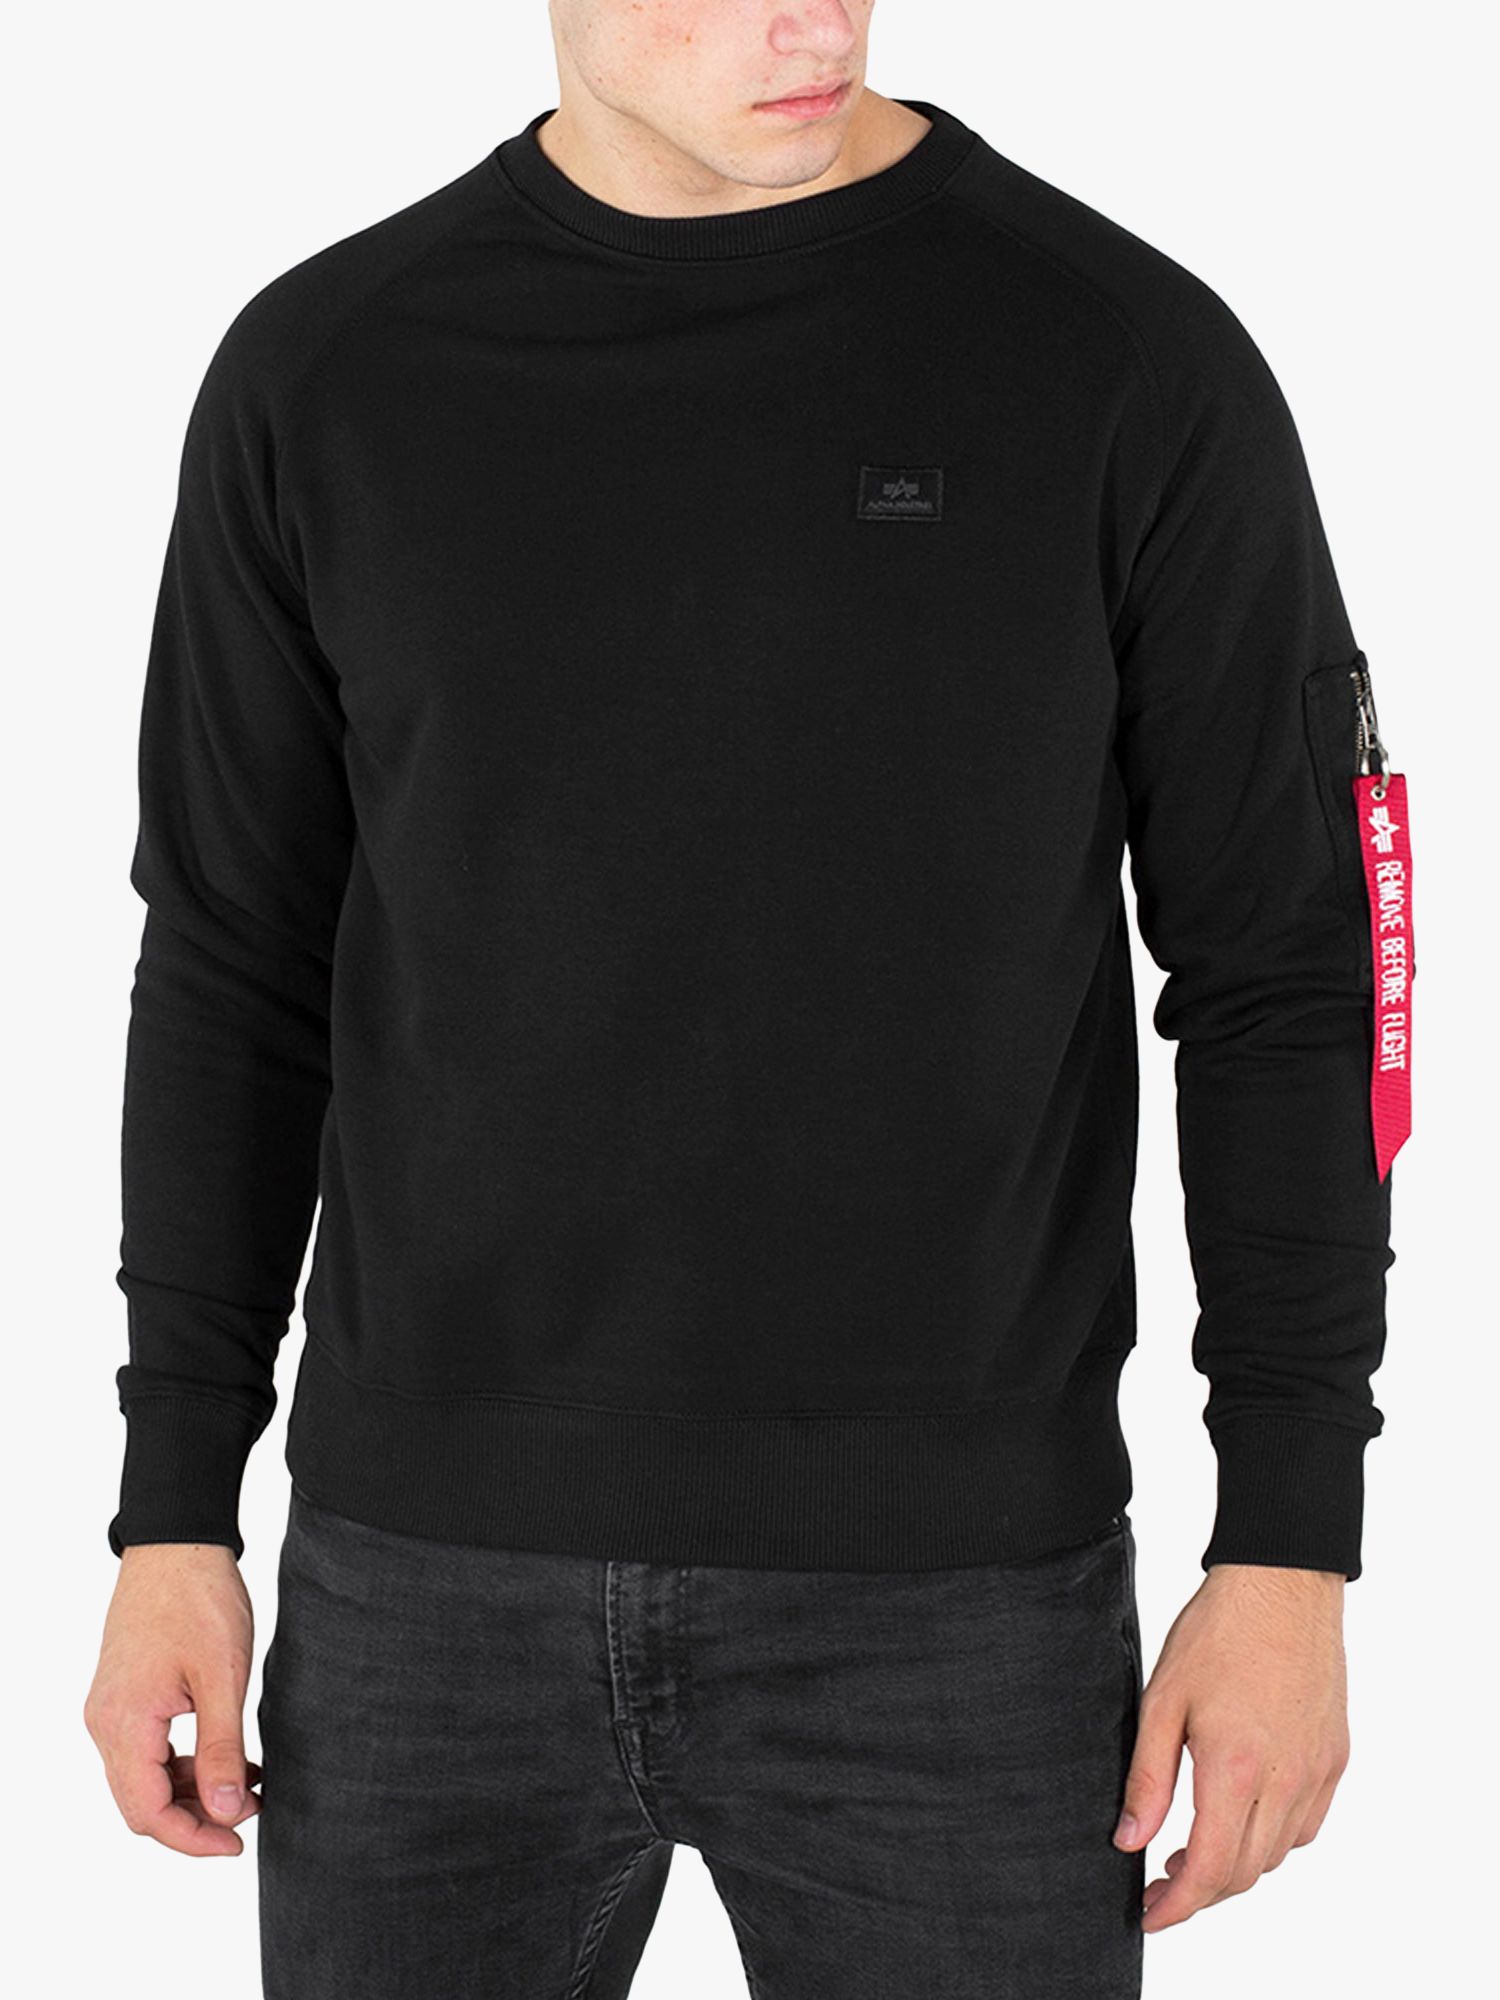 Pocket Black Sleeve Sweatshirt, Industries Partners at Alpha X-Fit & John 03 Zip Lewis